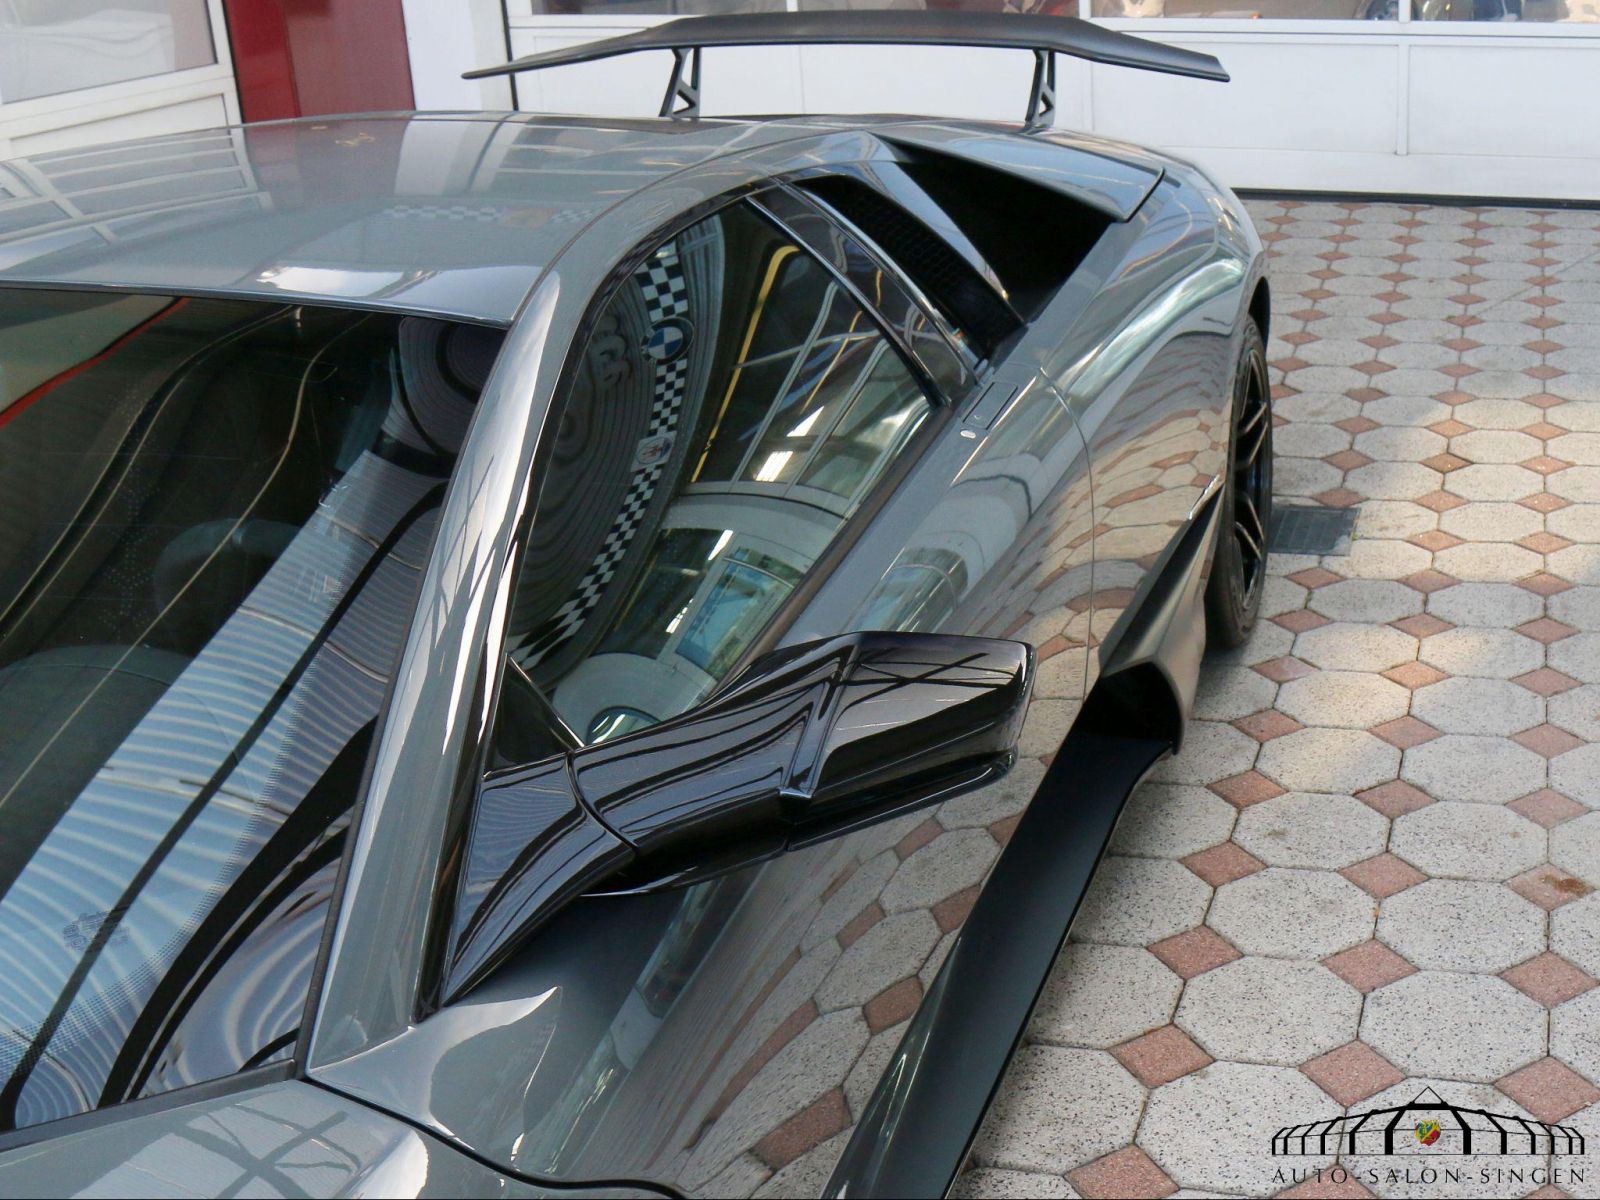 1 Stück Auto Einspritzdüse # IW031 Teile Fit Für Lamborghini Murcielago 6.2